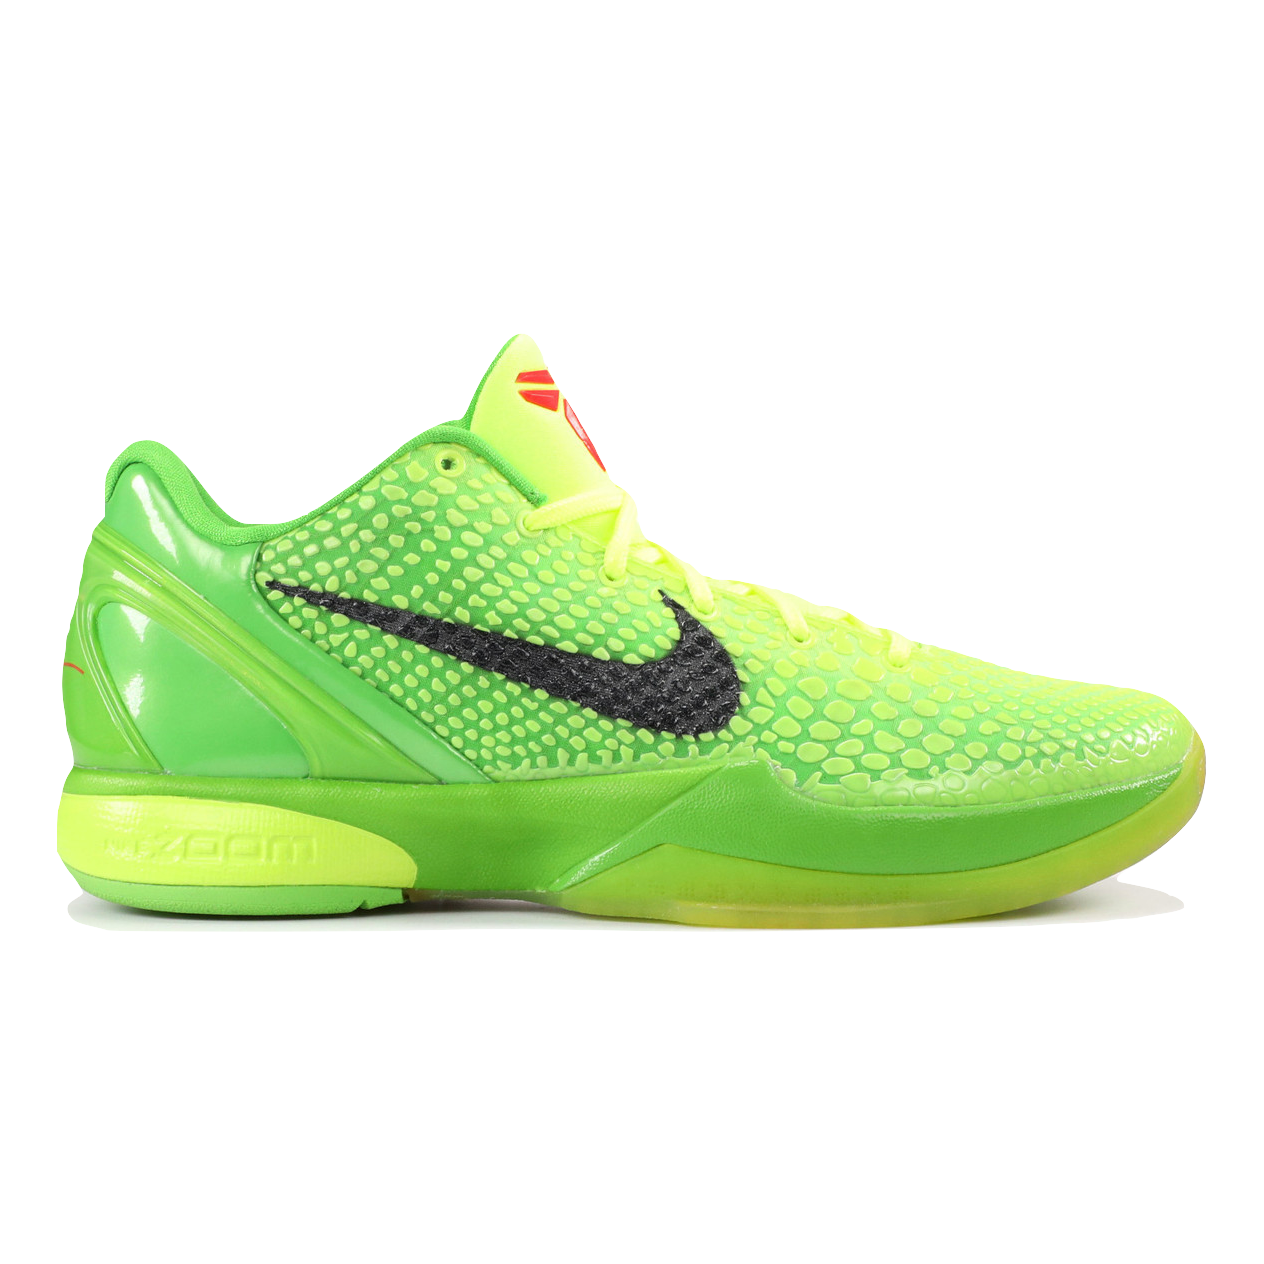 Nike Zoom Kobe VI - Grinch - Used